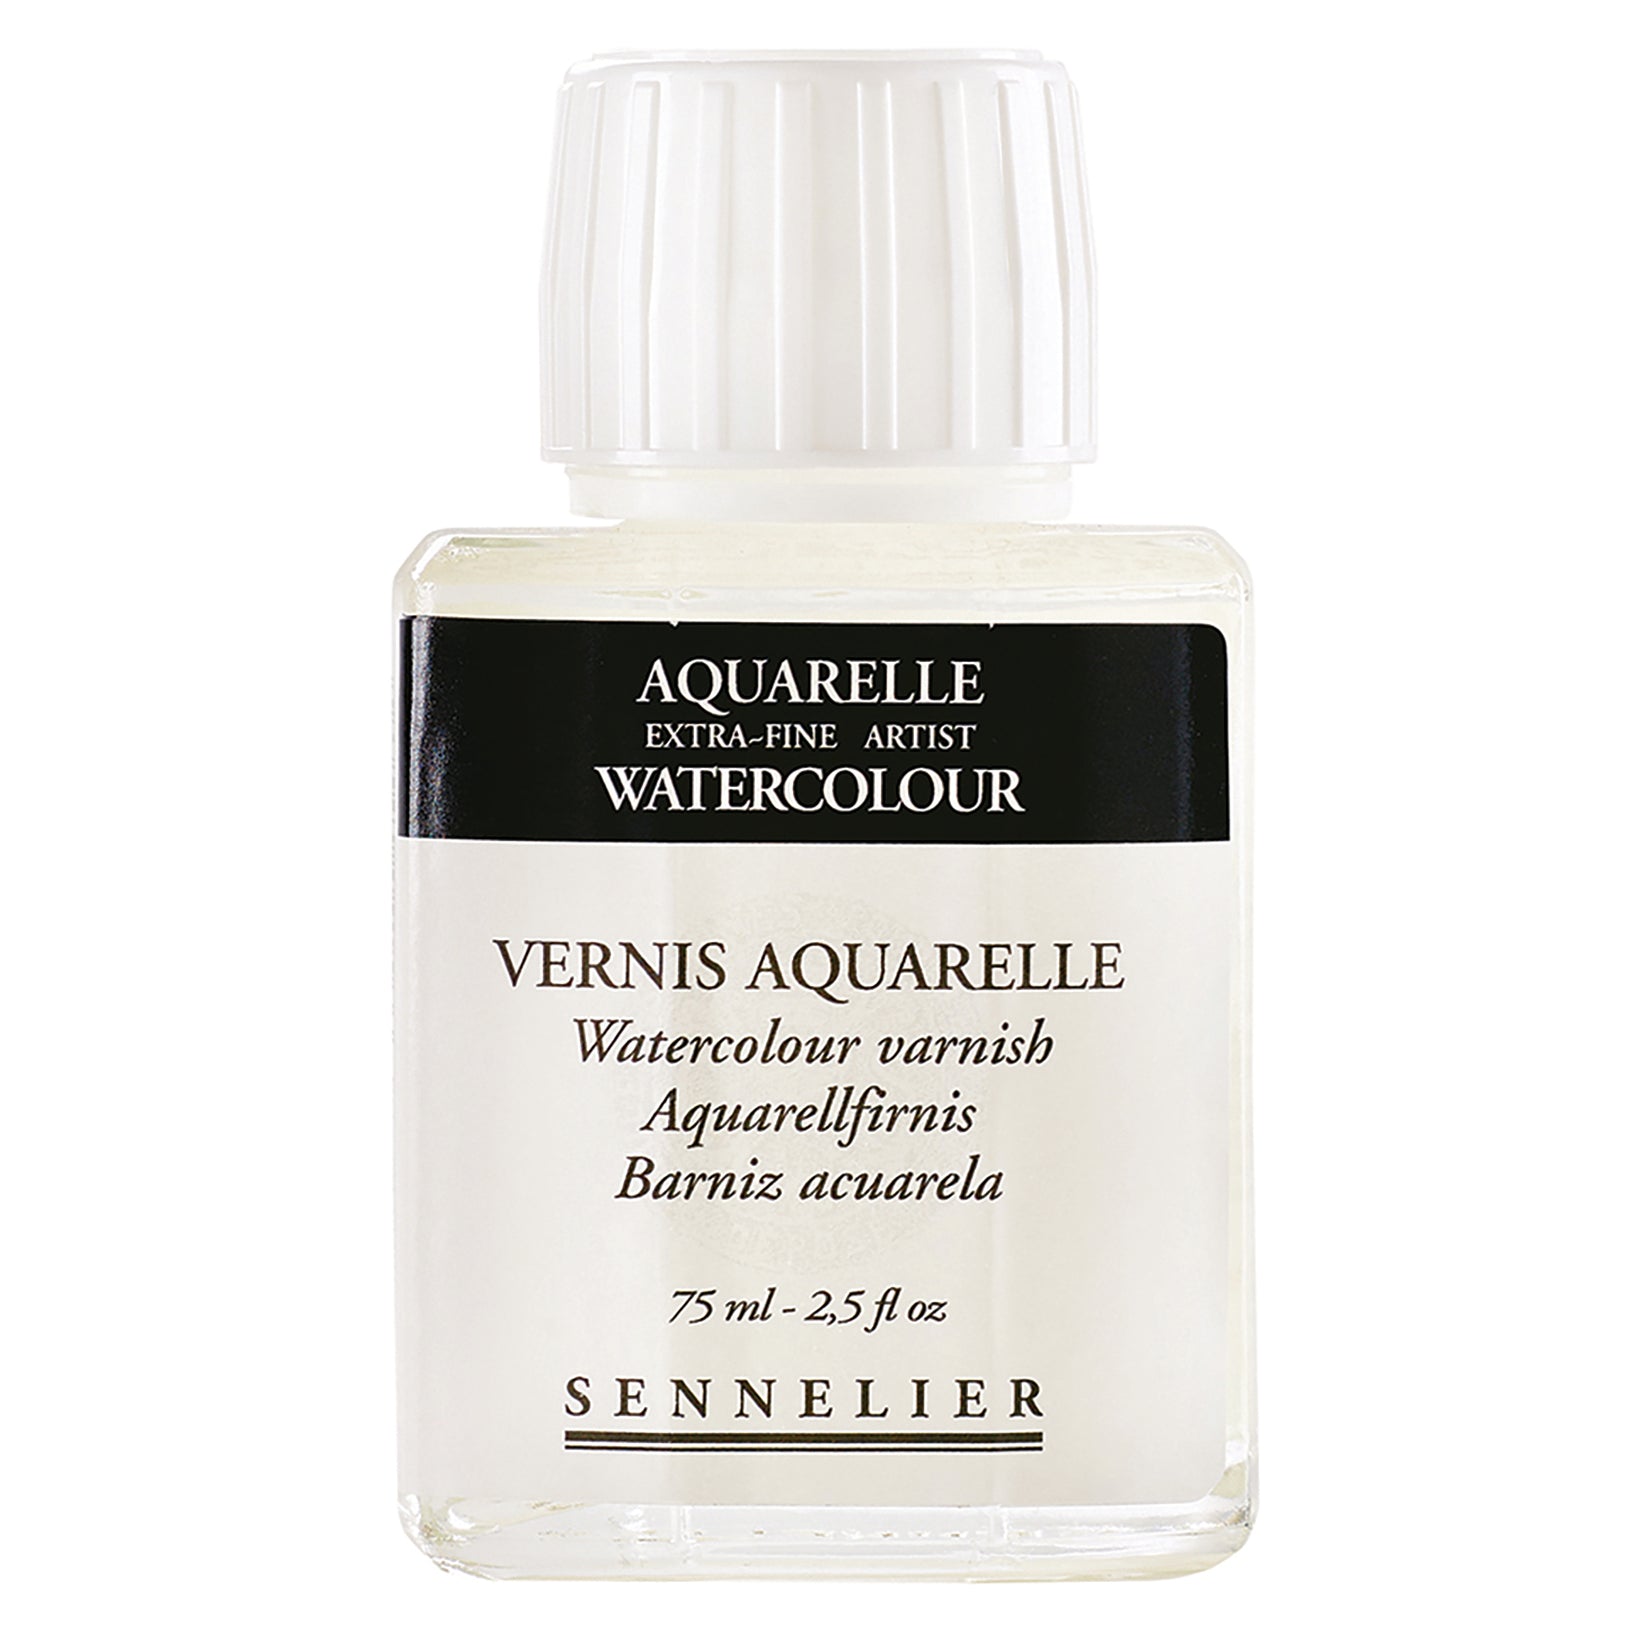 Sennelier Watercolour Varnish - Melbourne Etching Supplies